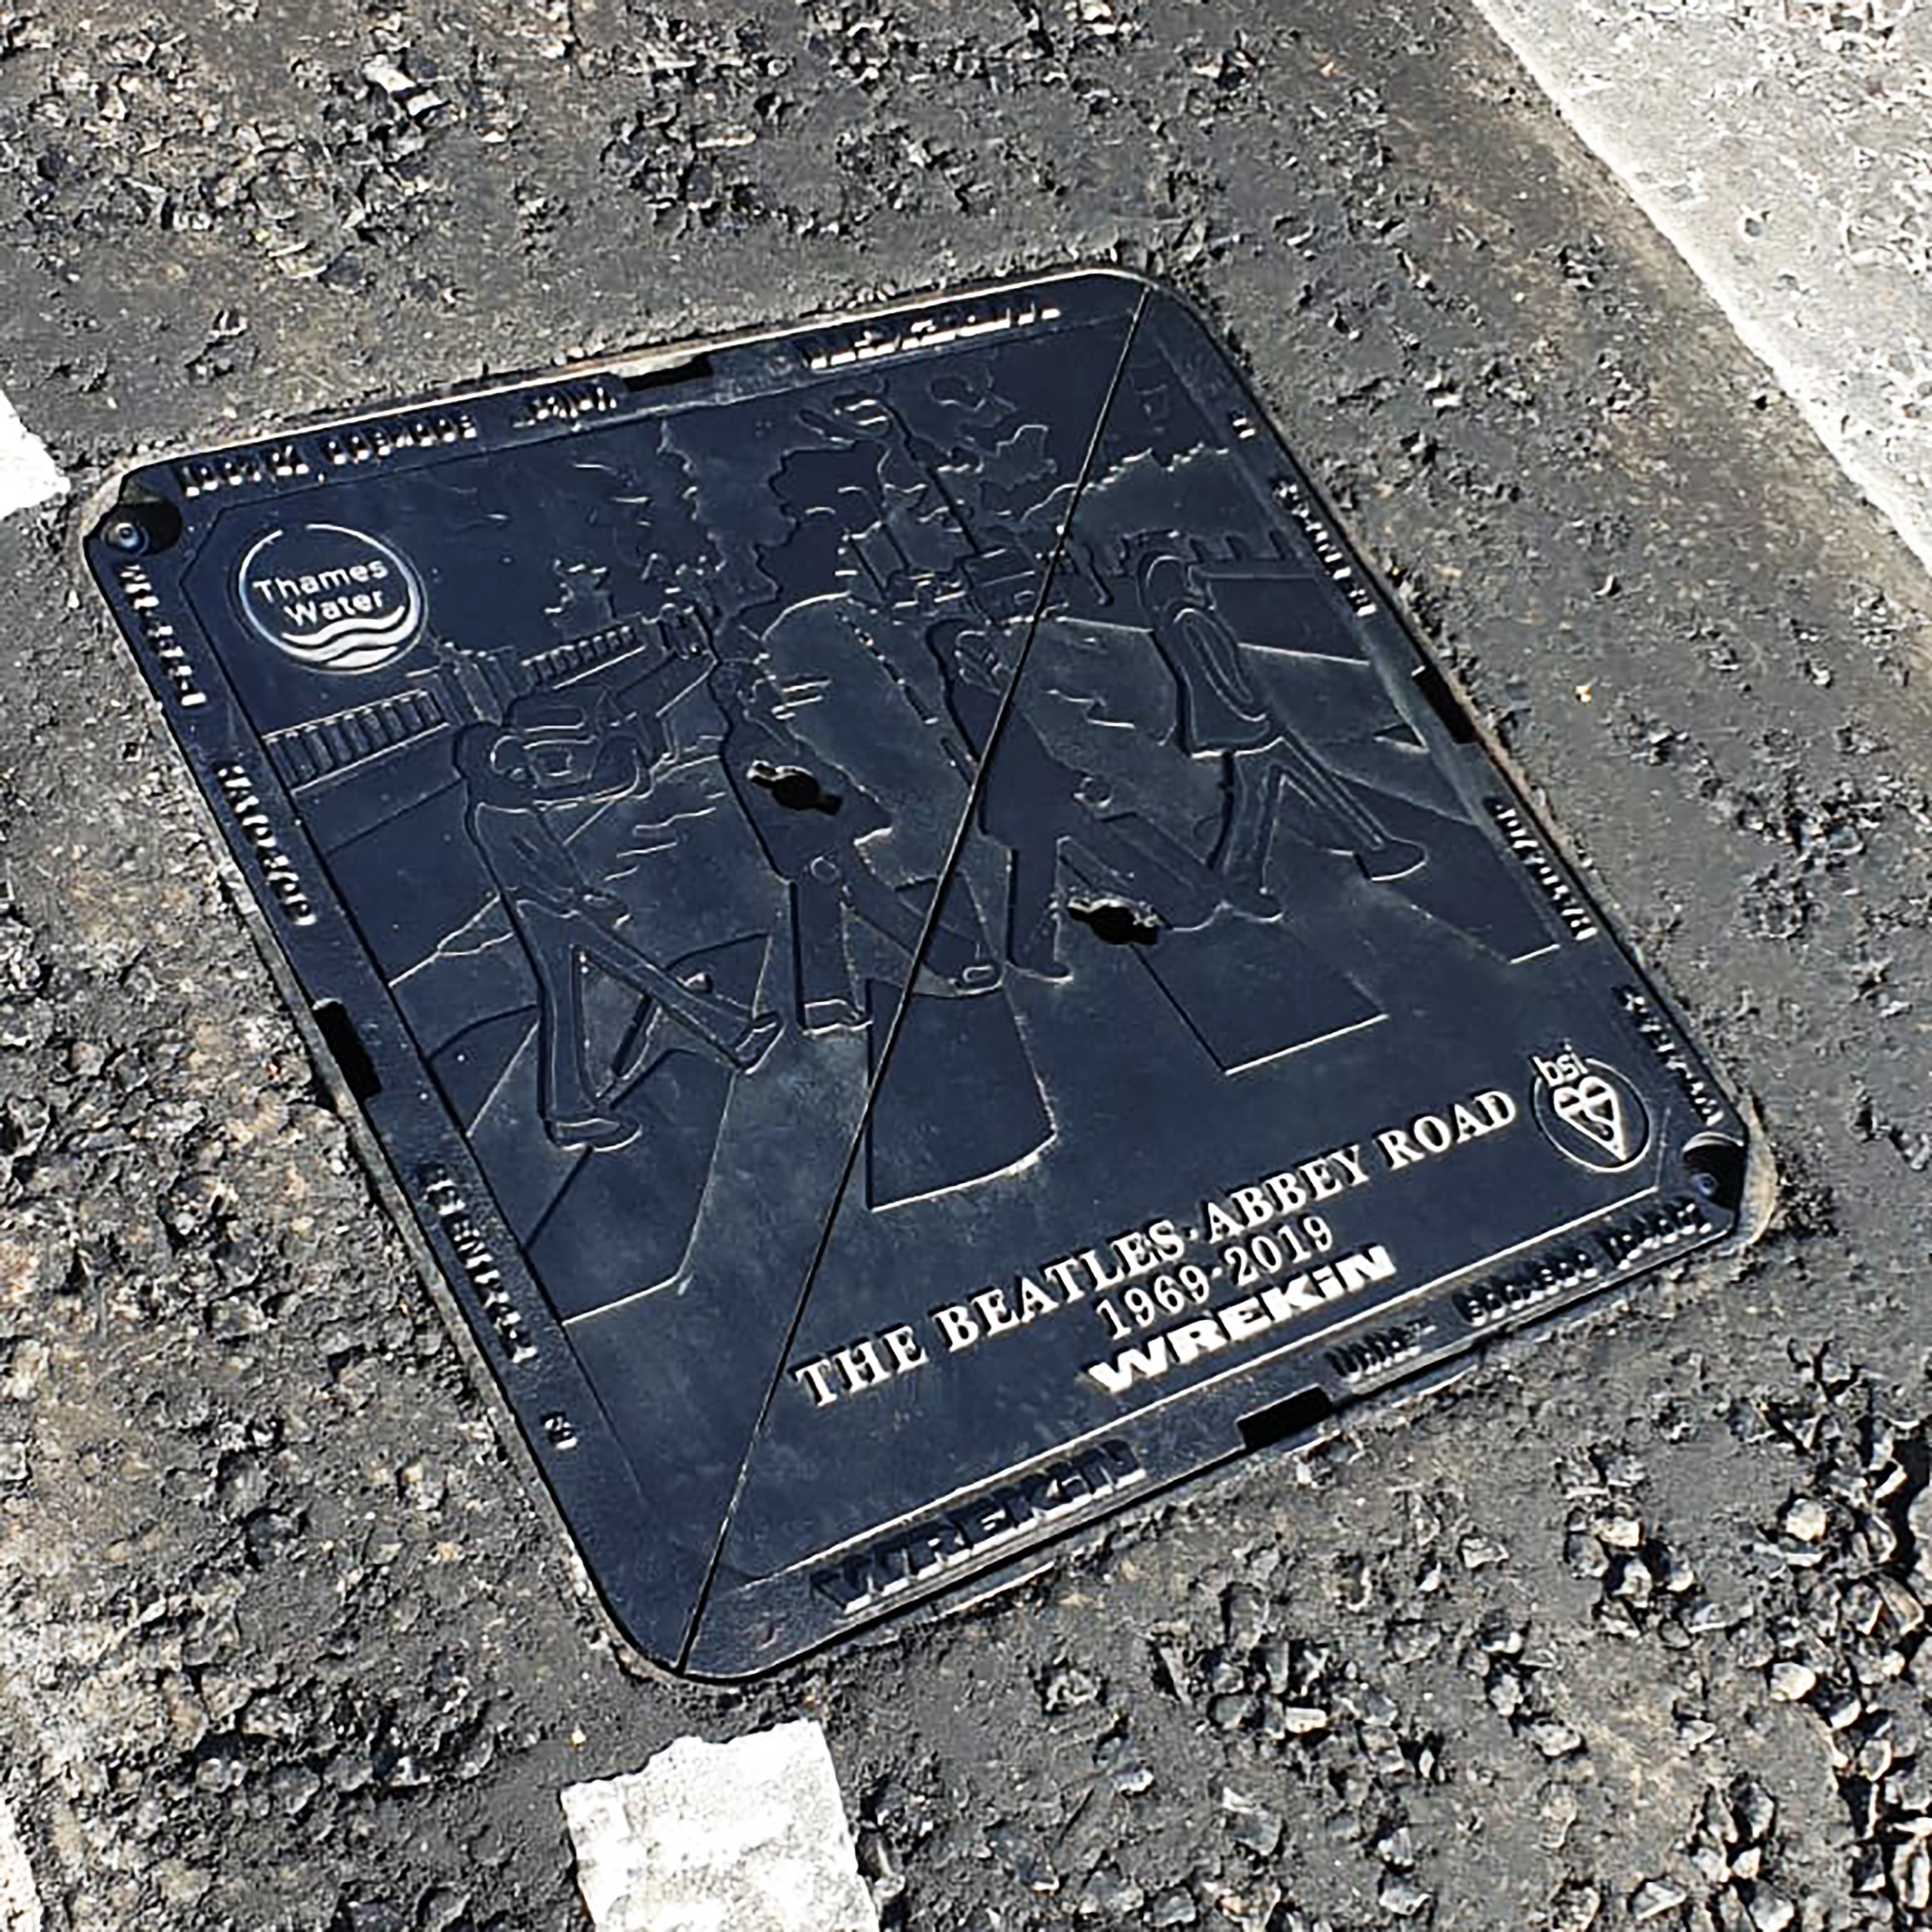 Abbey Road custom manhole cover